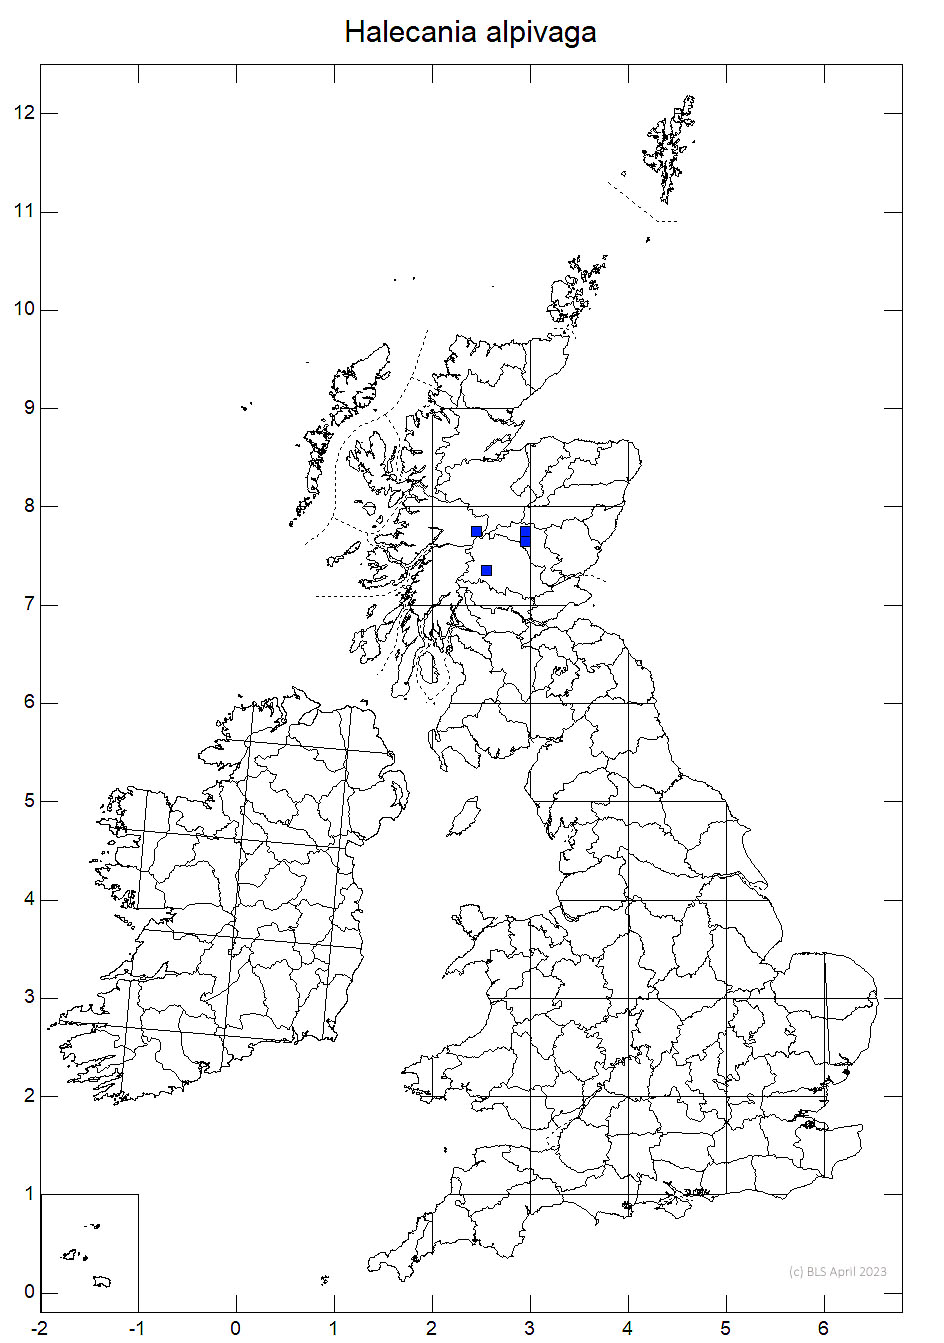 Halecania alpivaga 10km sq distribution map